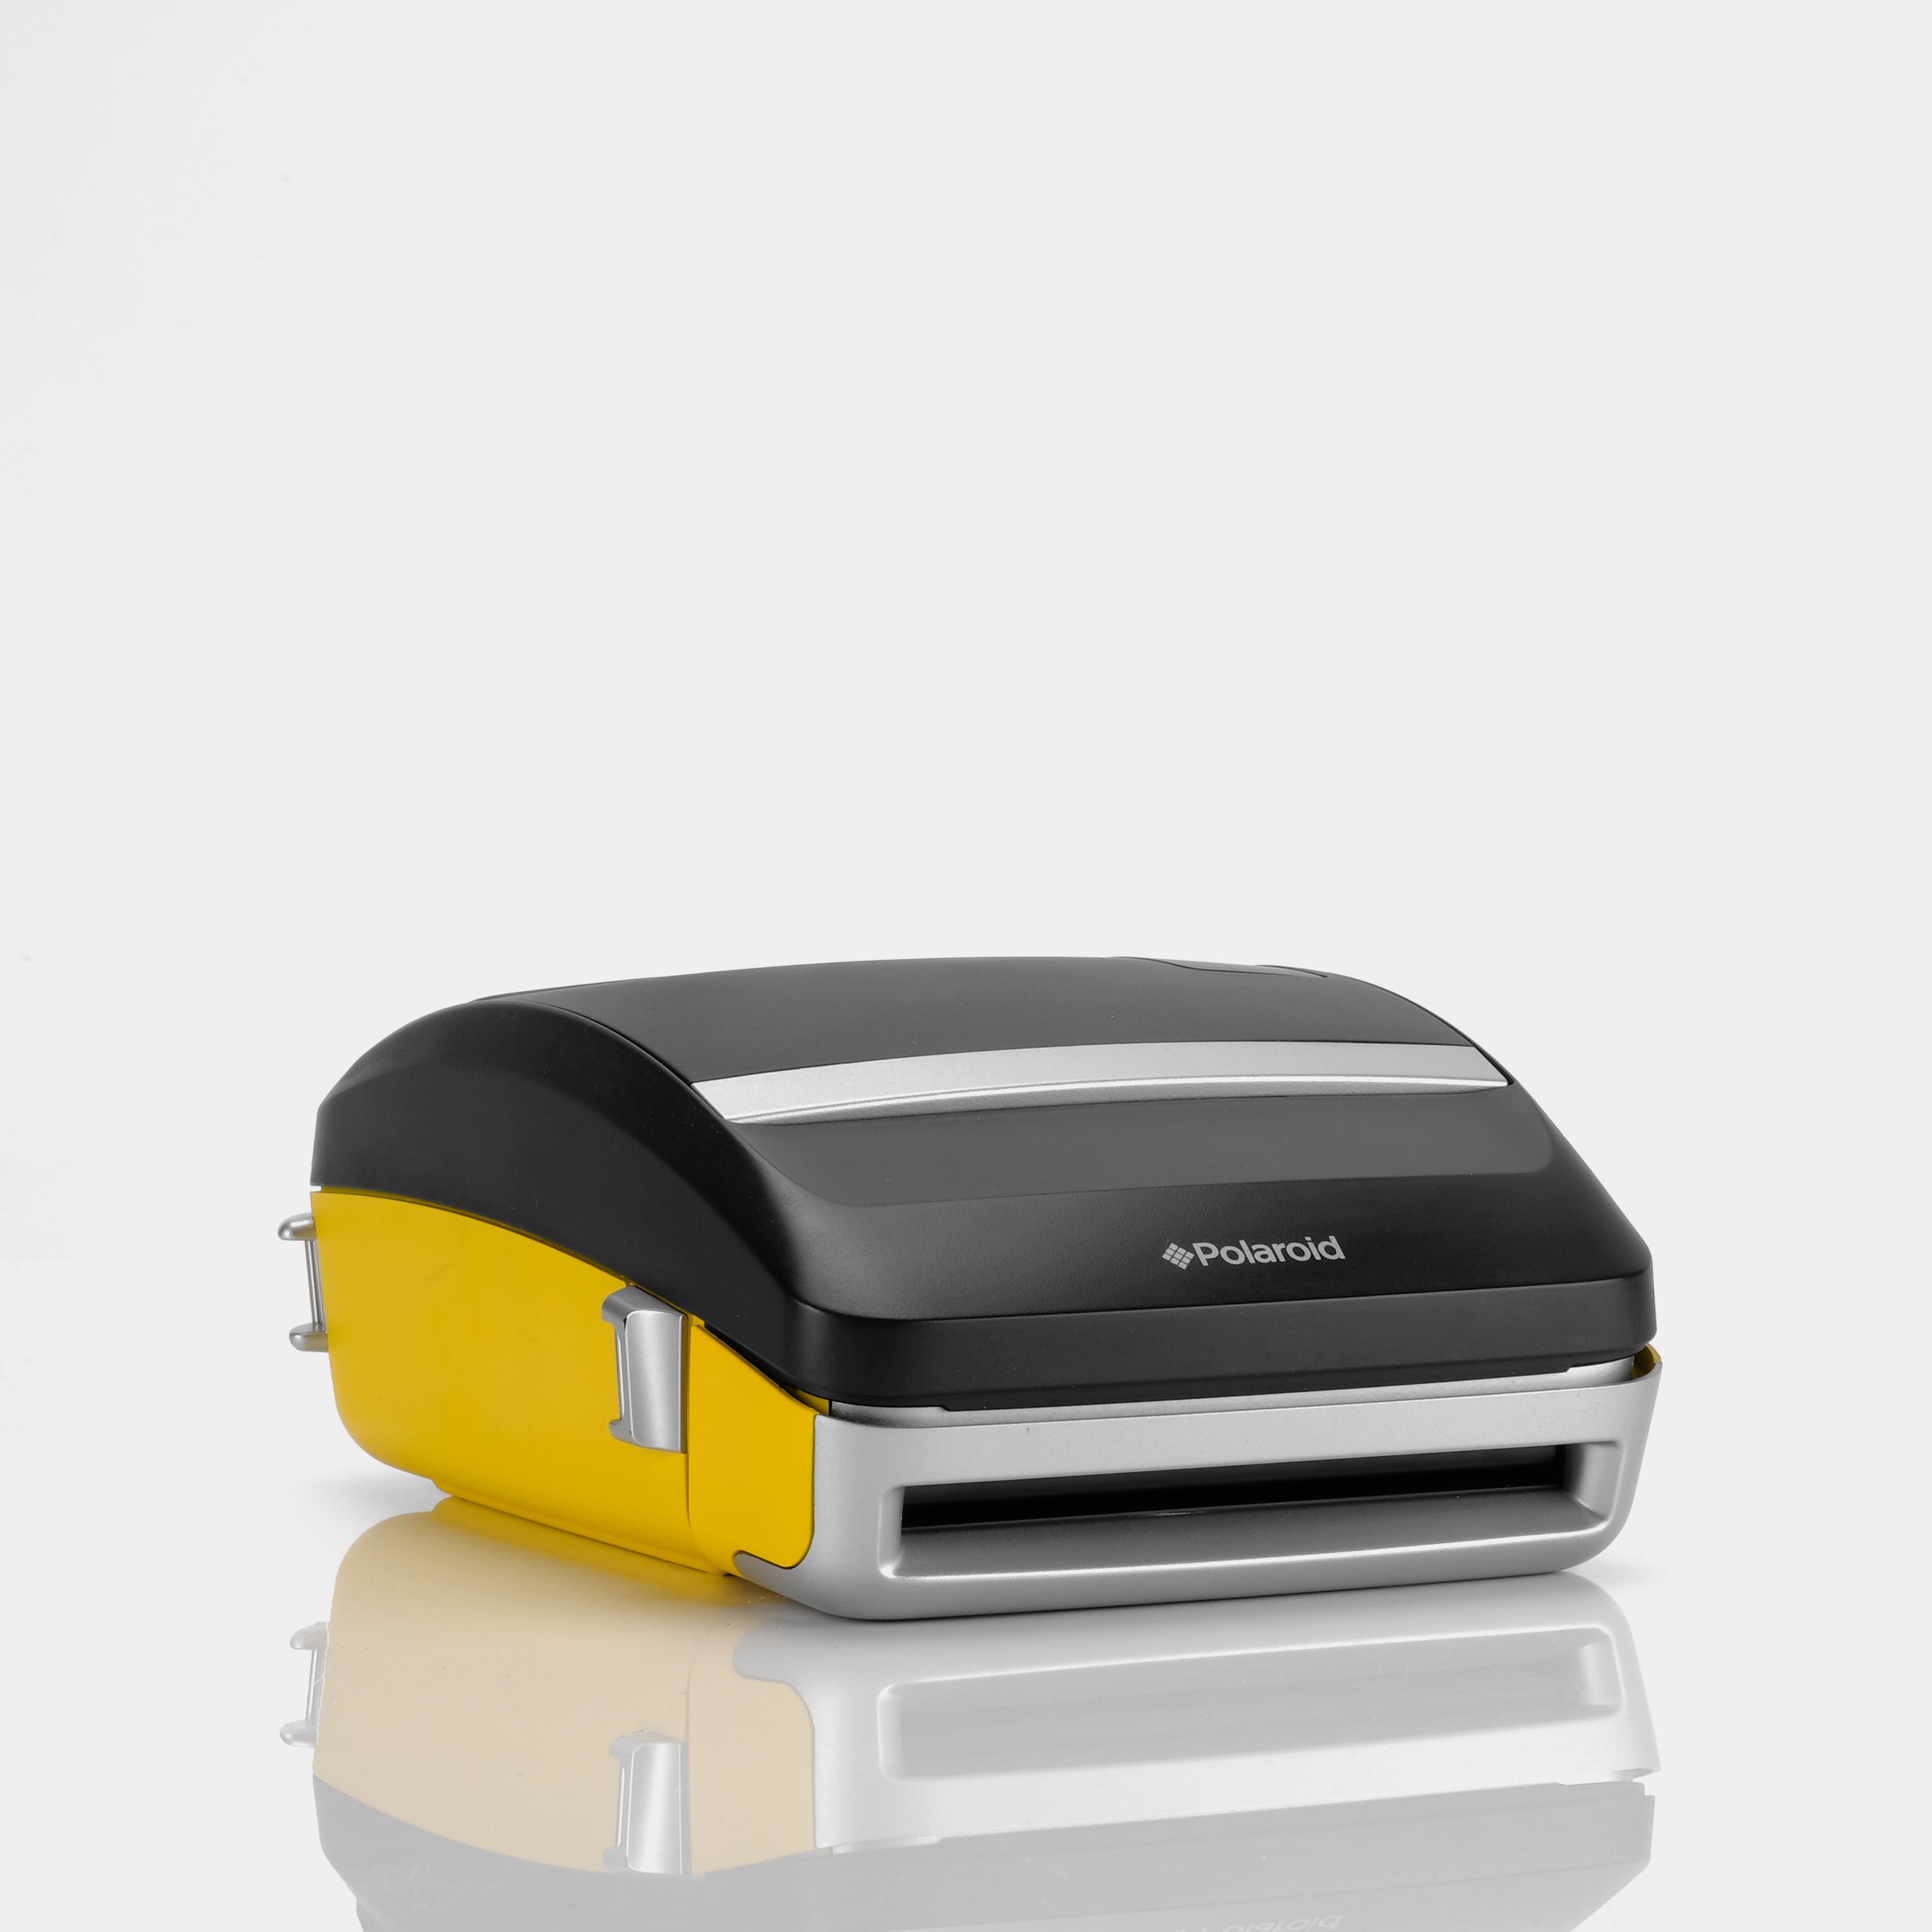 Polaroid One600 "JobPro" Black and Yellow Instant Film Camera